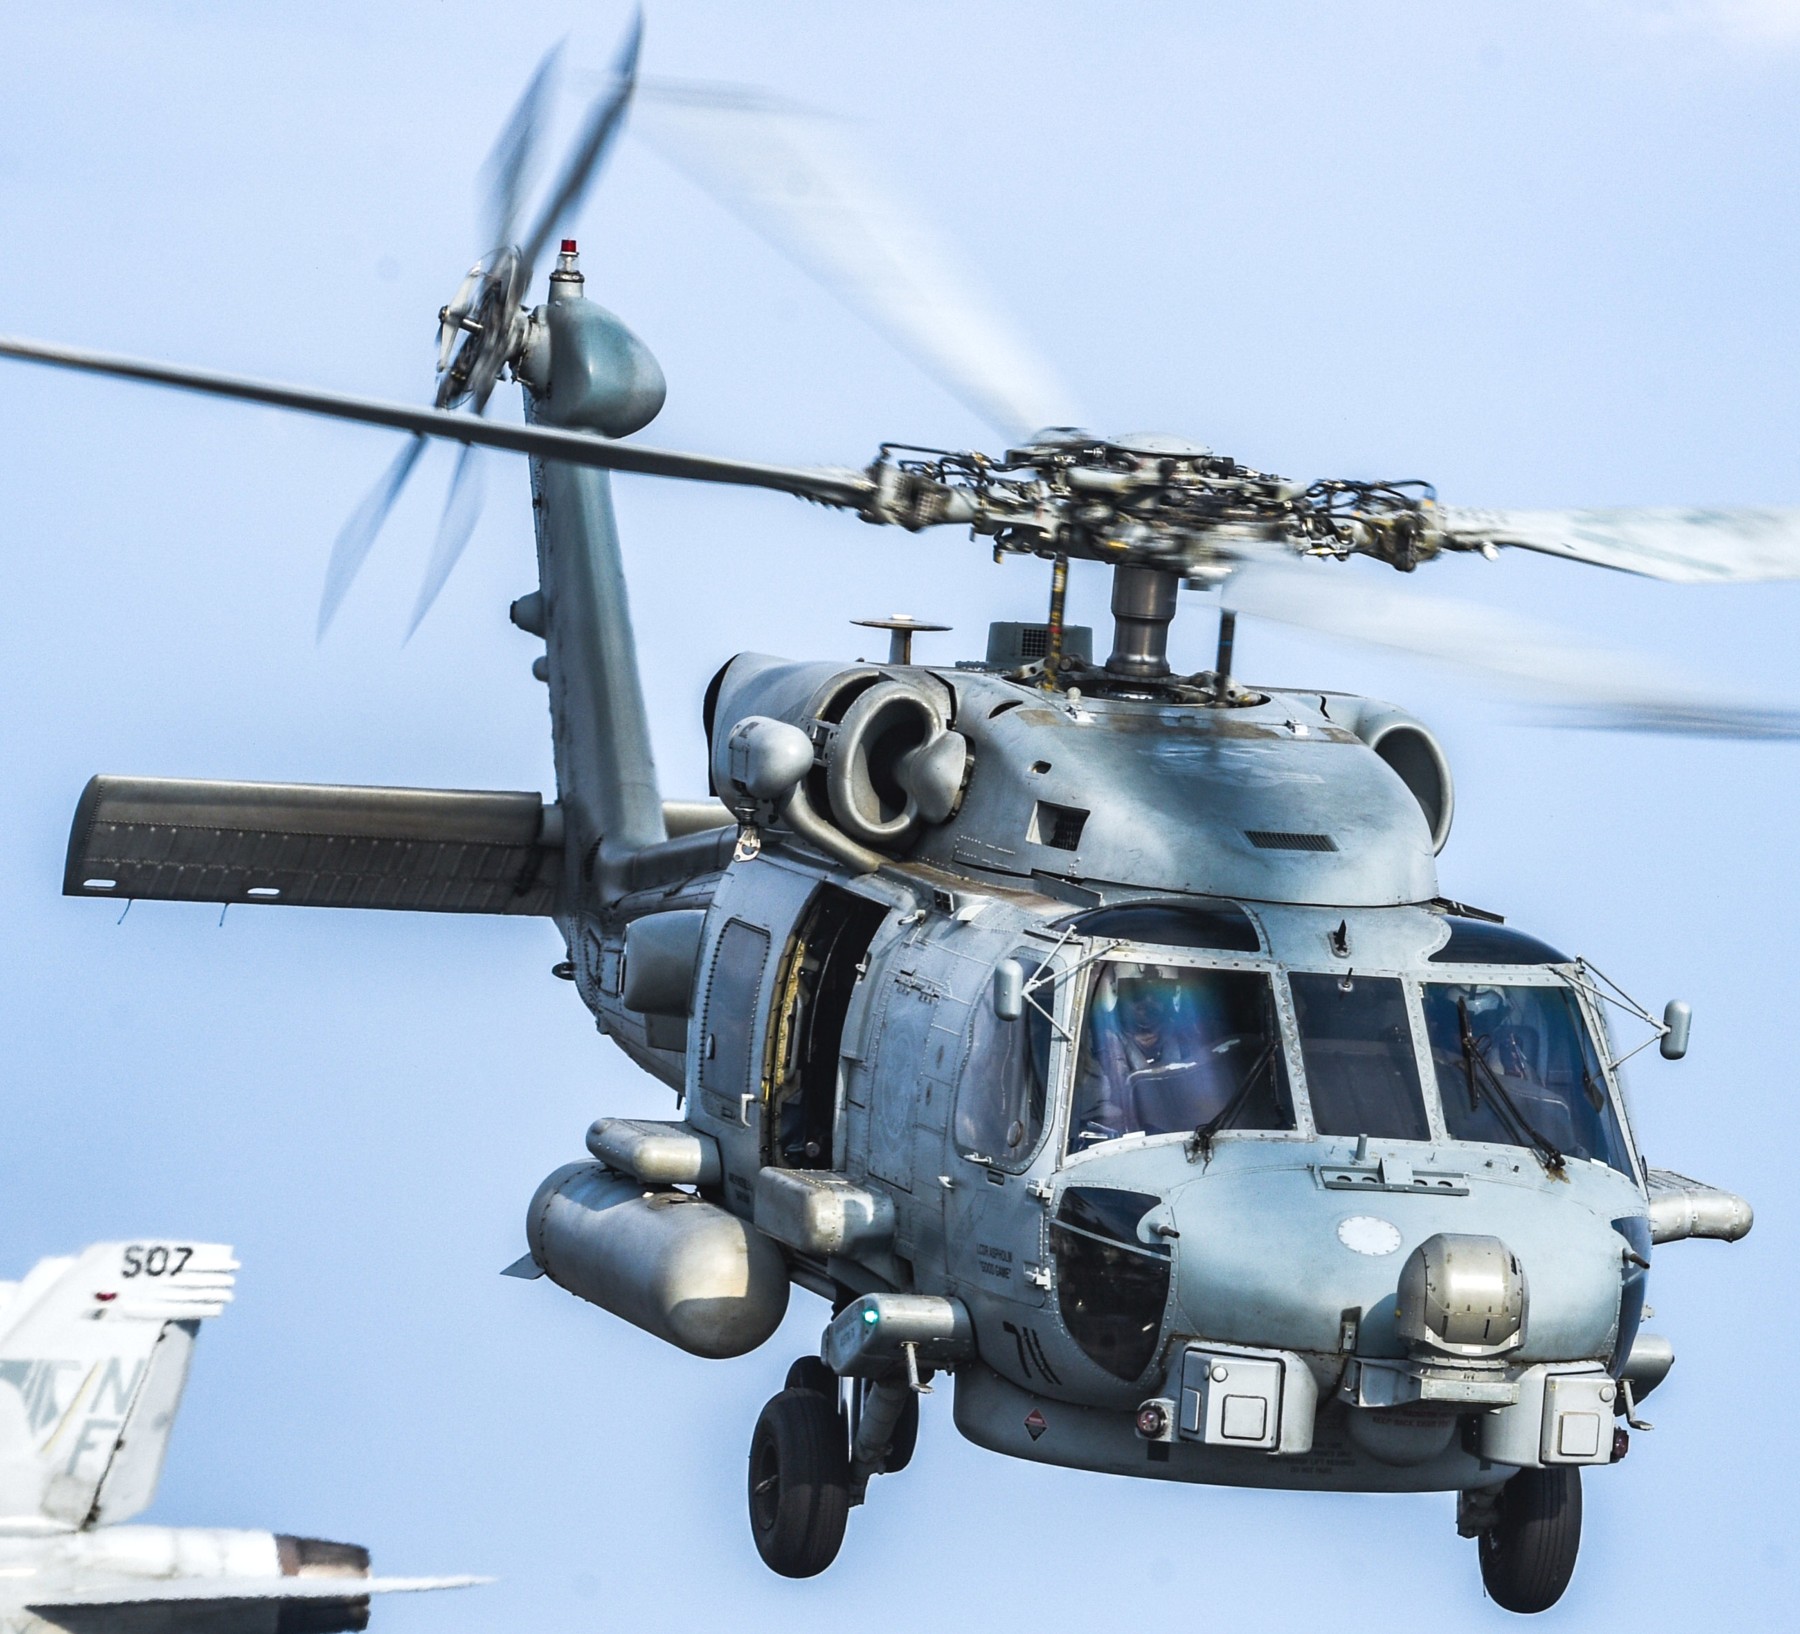 hsm-77 saberhawks helicopter maritime strike squadron mh-60r seahawk us navy 2015 66 uss george washington cvn-73 carrier air wing cvw-5